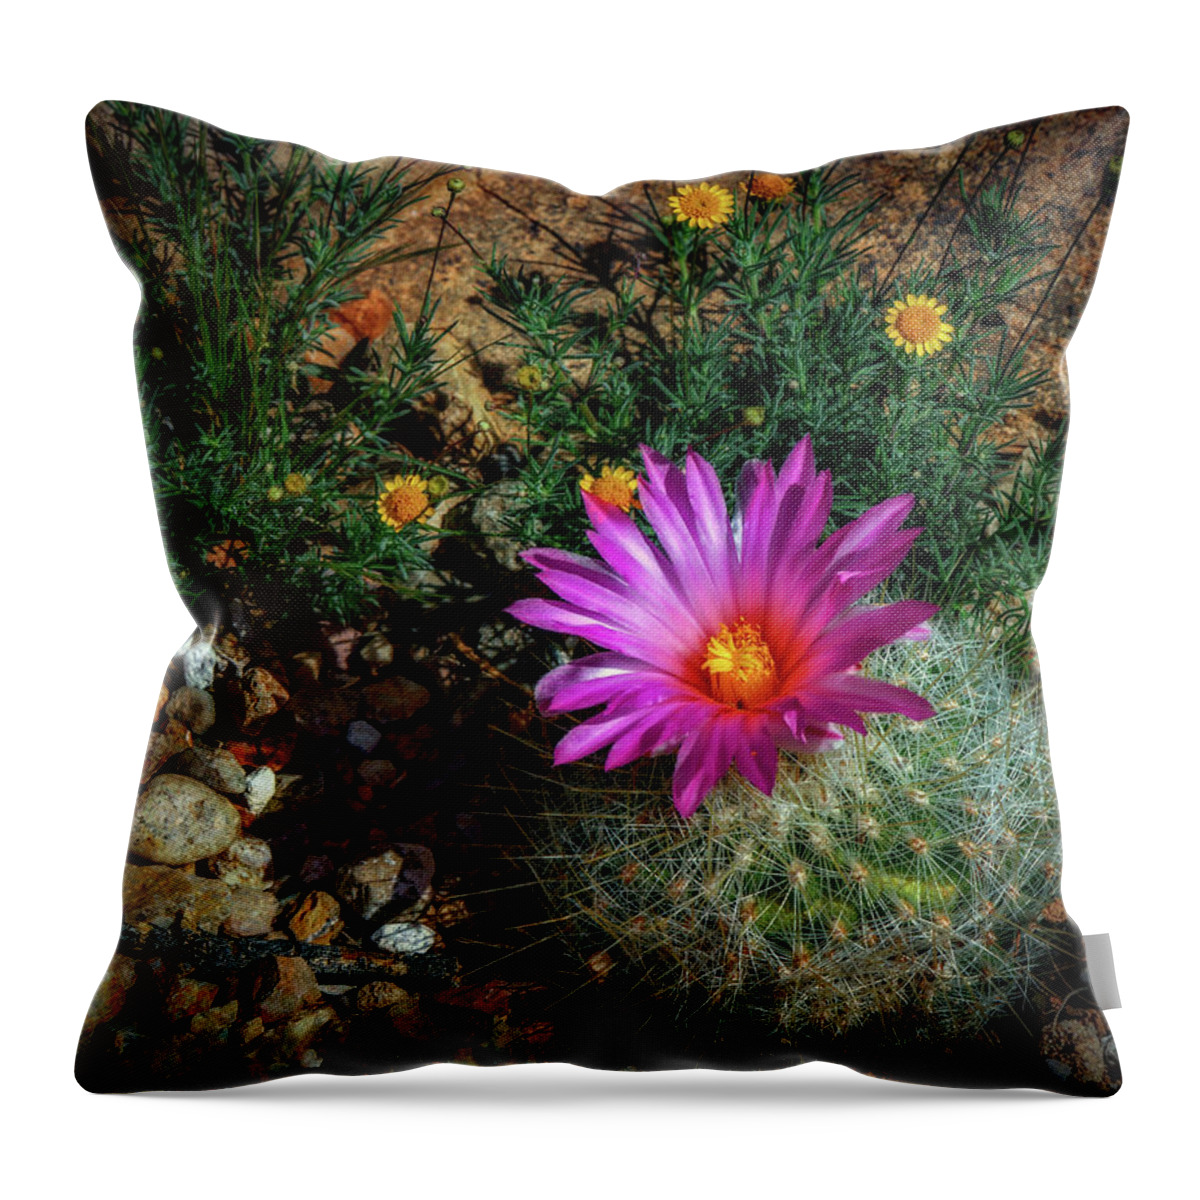 Flowers Throw Pillow featuring the photograph Desert Splash by Elaine Malott